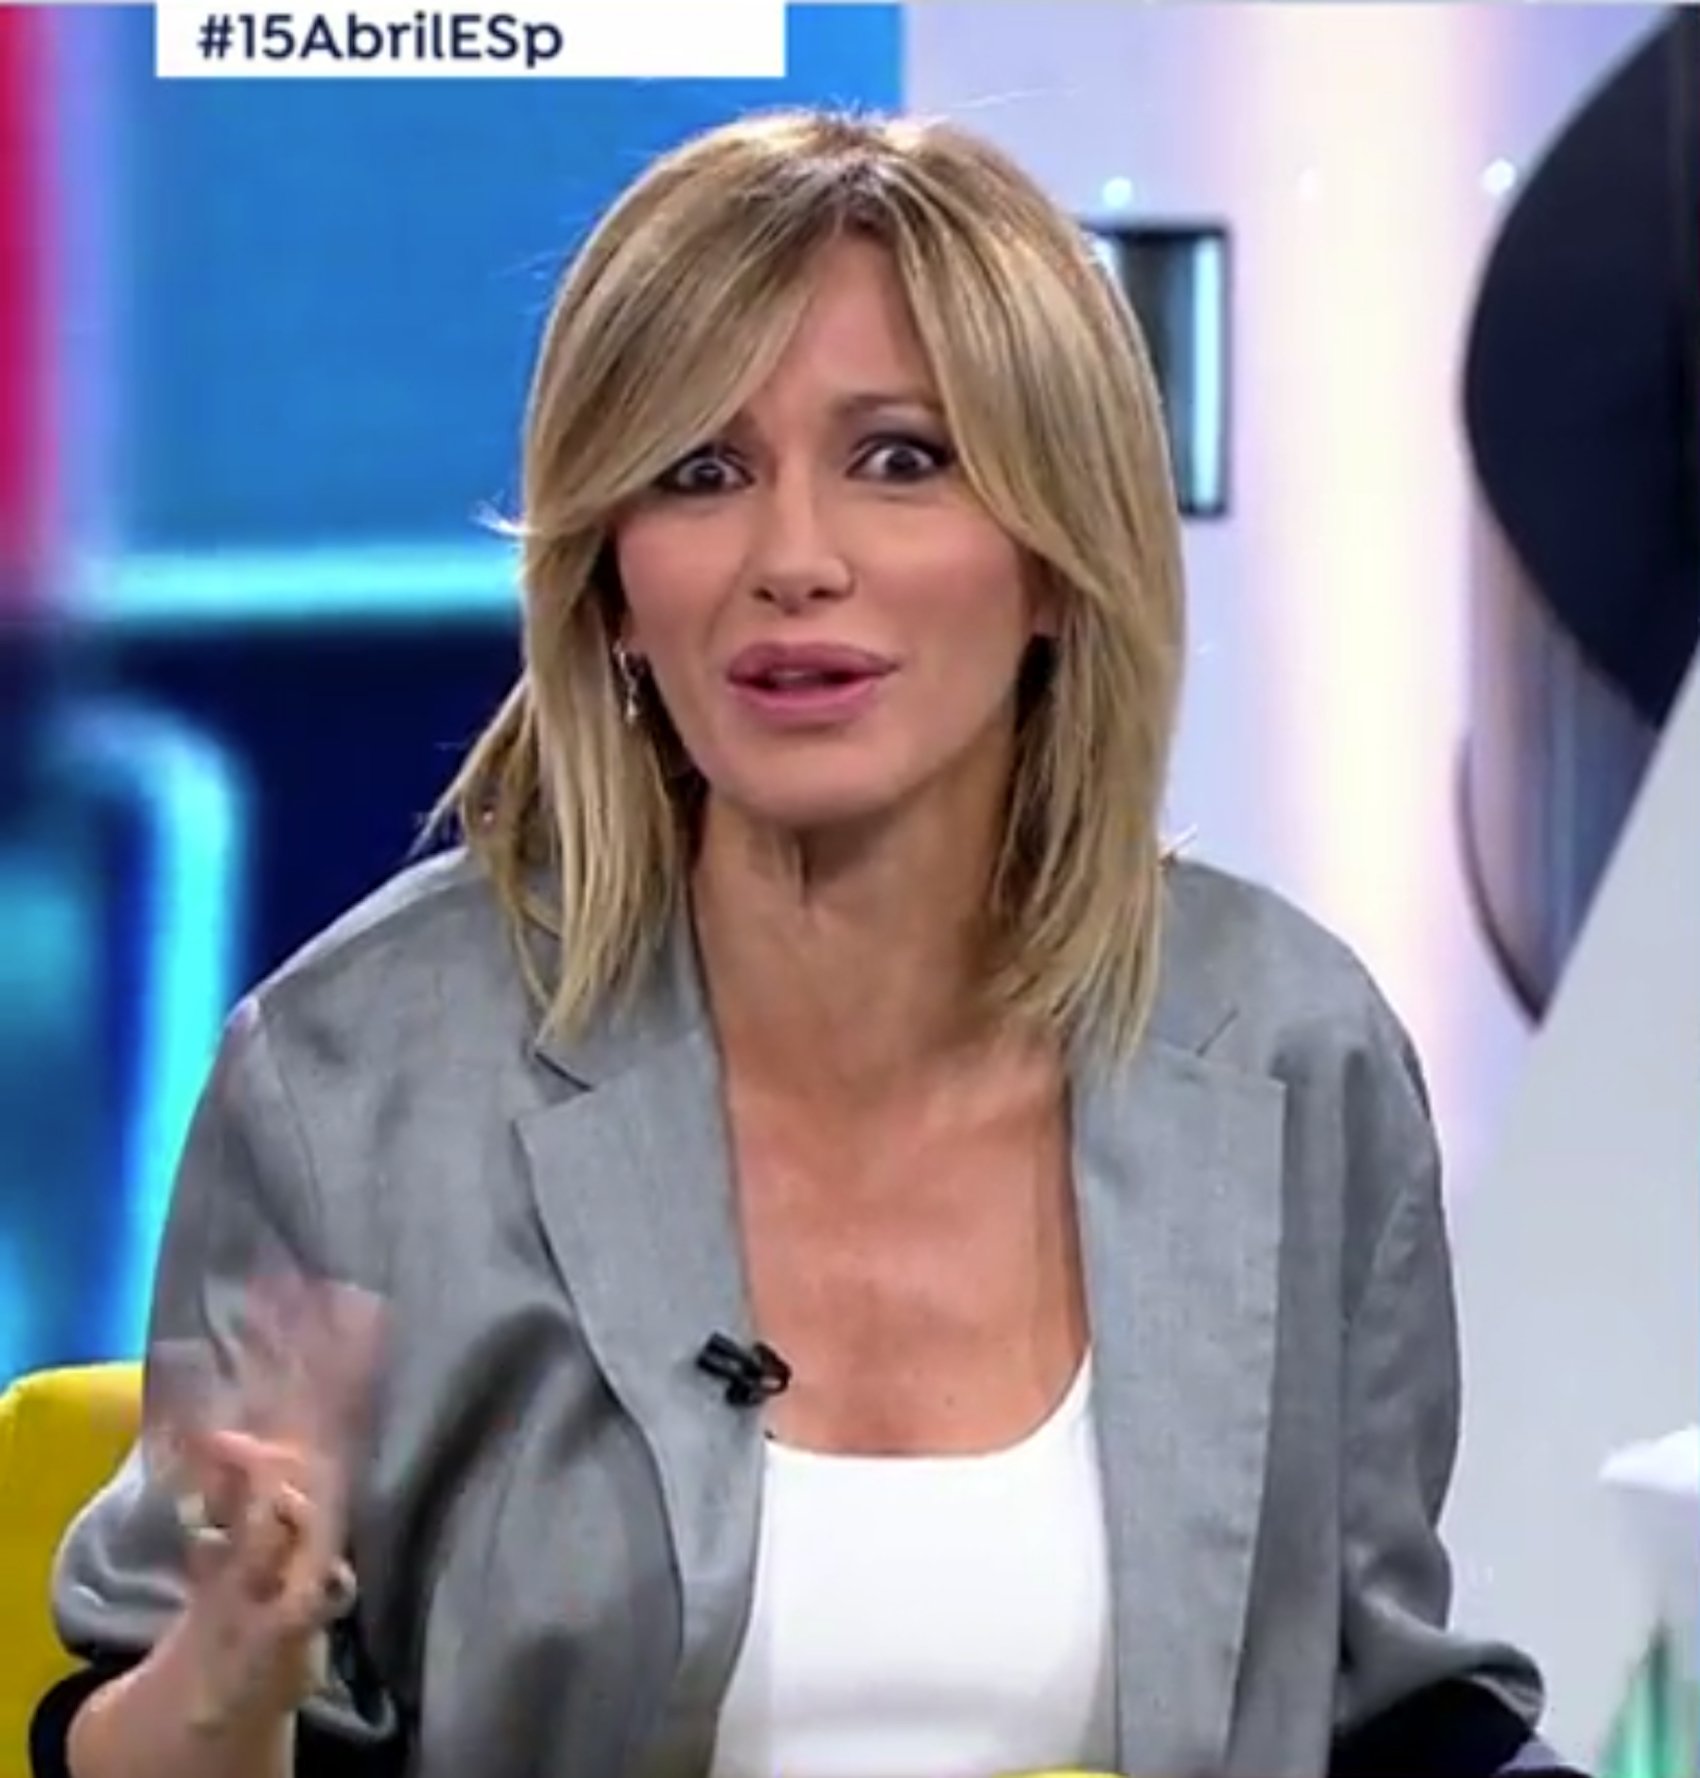 Fachas enloquecidos contra Susanna Griso por rebatir a VOX: "retrasada, indepe"